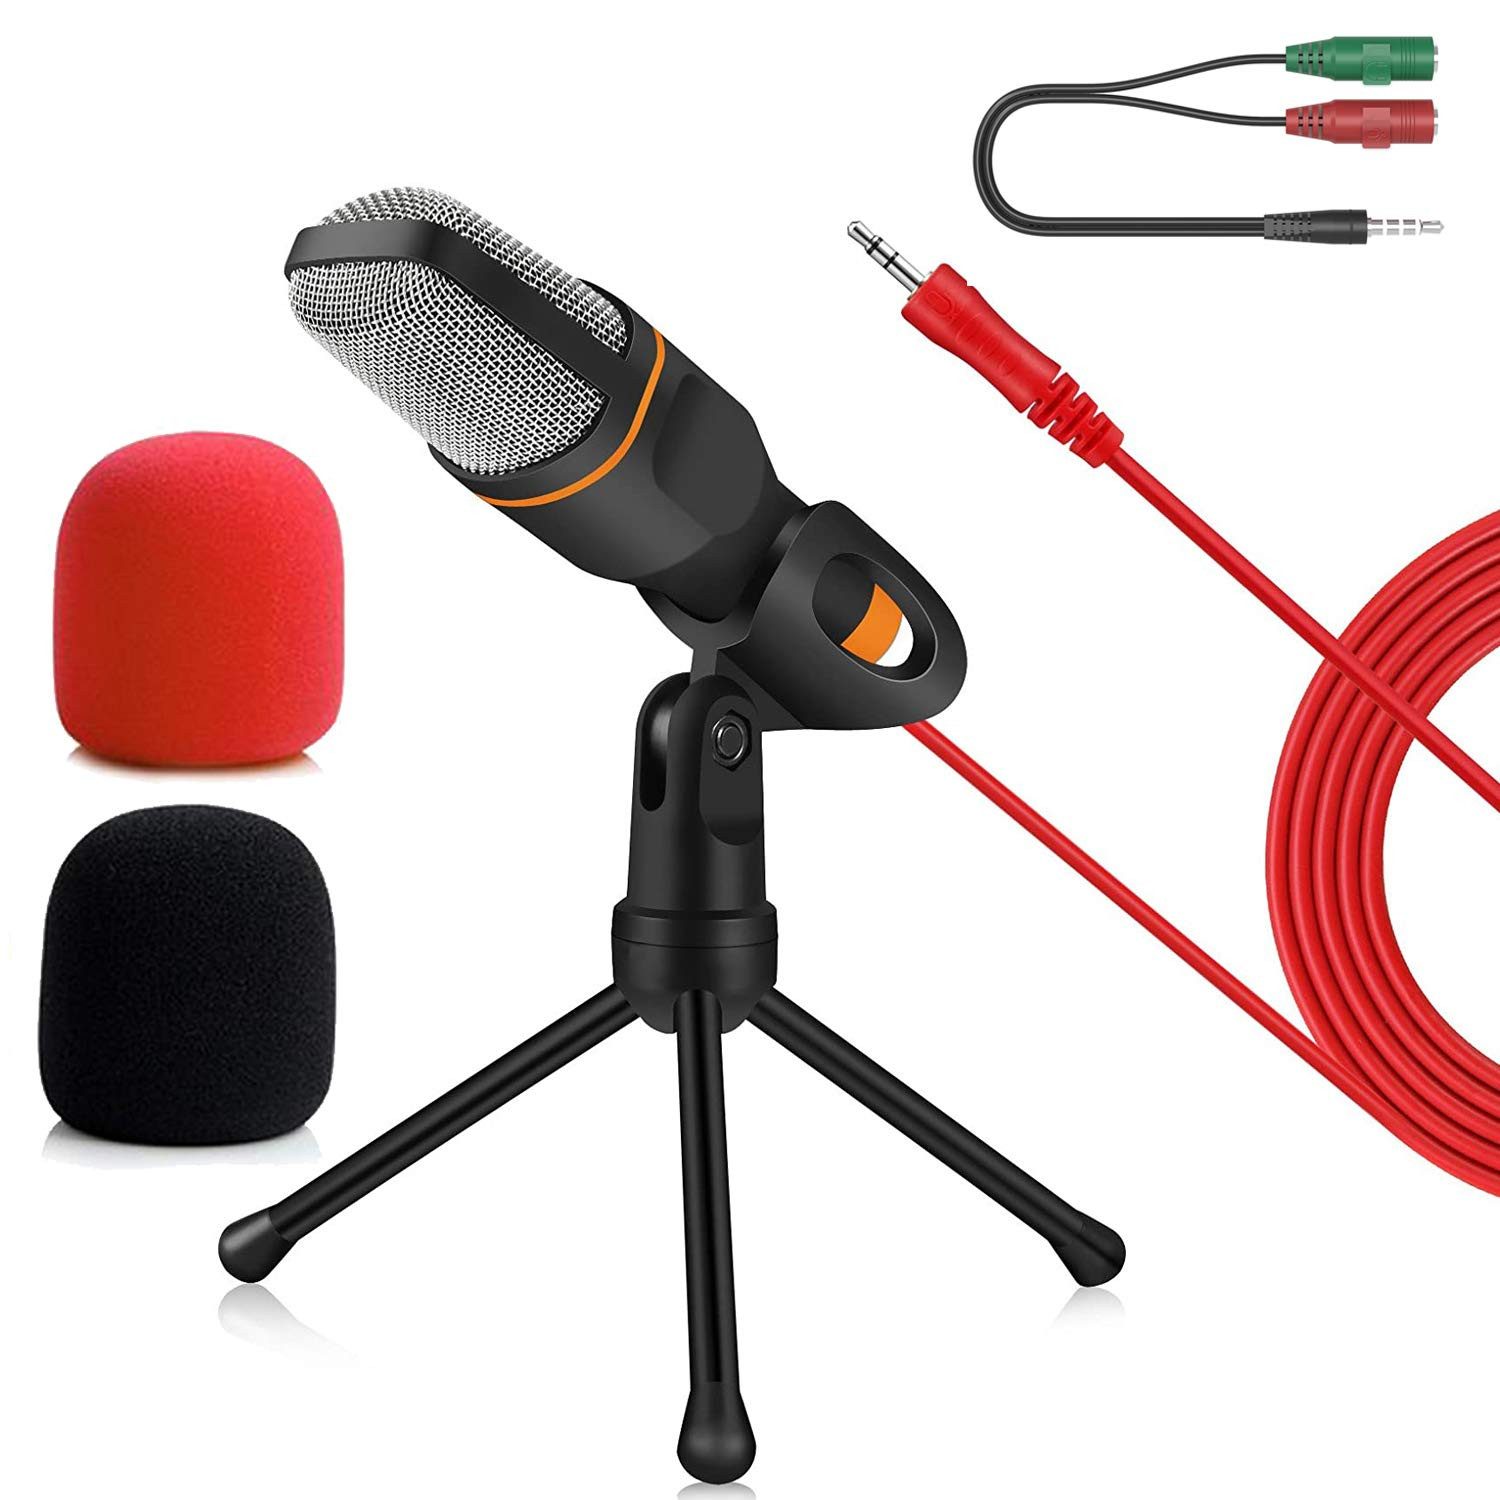 Avisto Mikrofon Streaming-Mikrofon Mikrofon-Set mit Ständer tragbar Profi Podcast Set (1,8 Meter Kabel Kompatibel mit PC, Laptop, Smartphone), Vielseitiges PC-Mikrofon für Live-Streaming, Gaming, Konferenzen